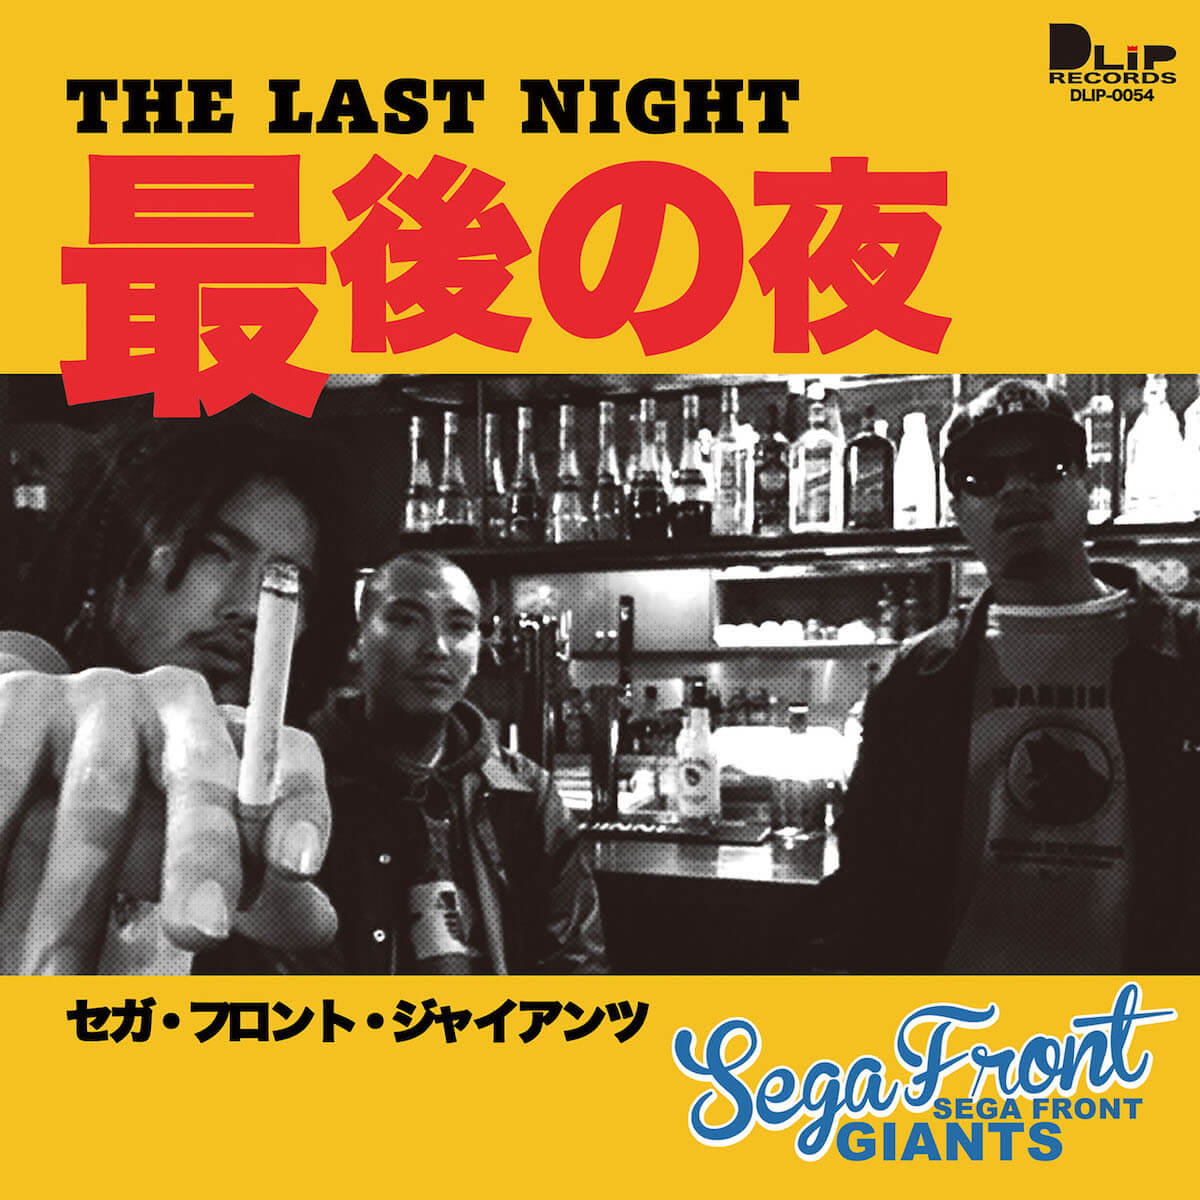 〈DLiP Records〉のSEGA FRONT GIANTSが4年ぶりの新曲「最後の夜」を7インチリリース！ music190426_segafrontgiants_main